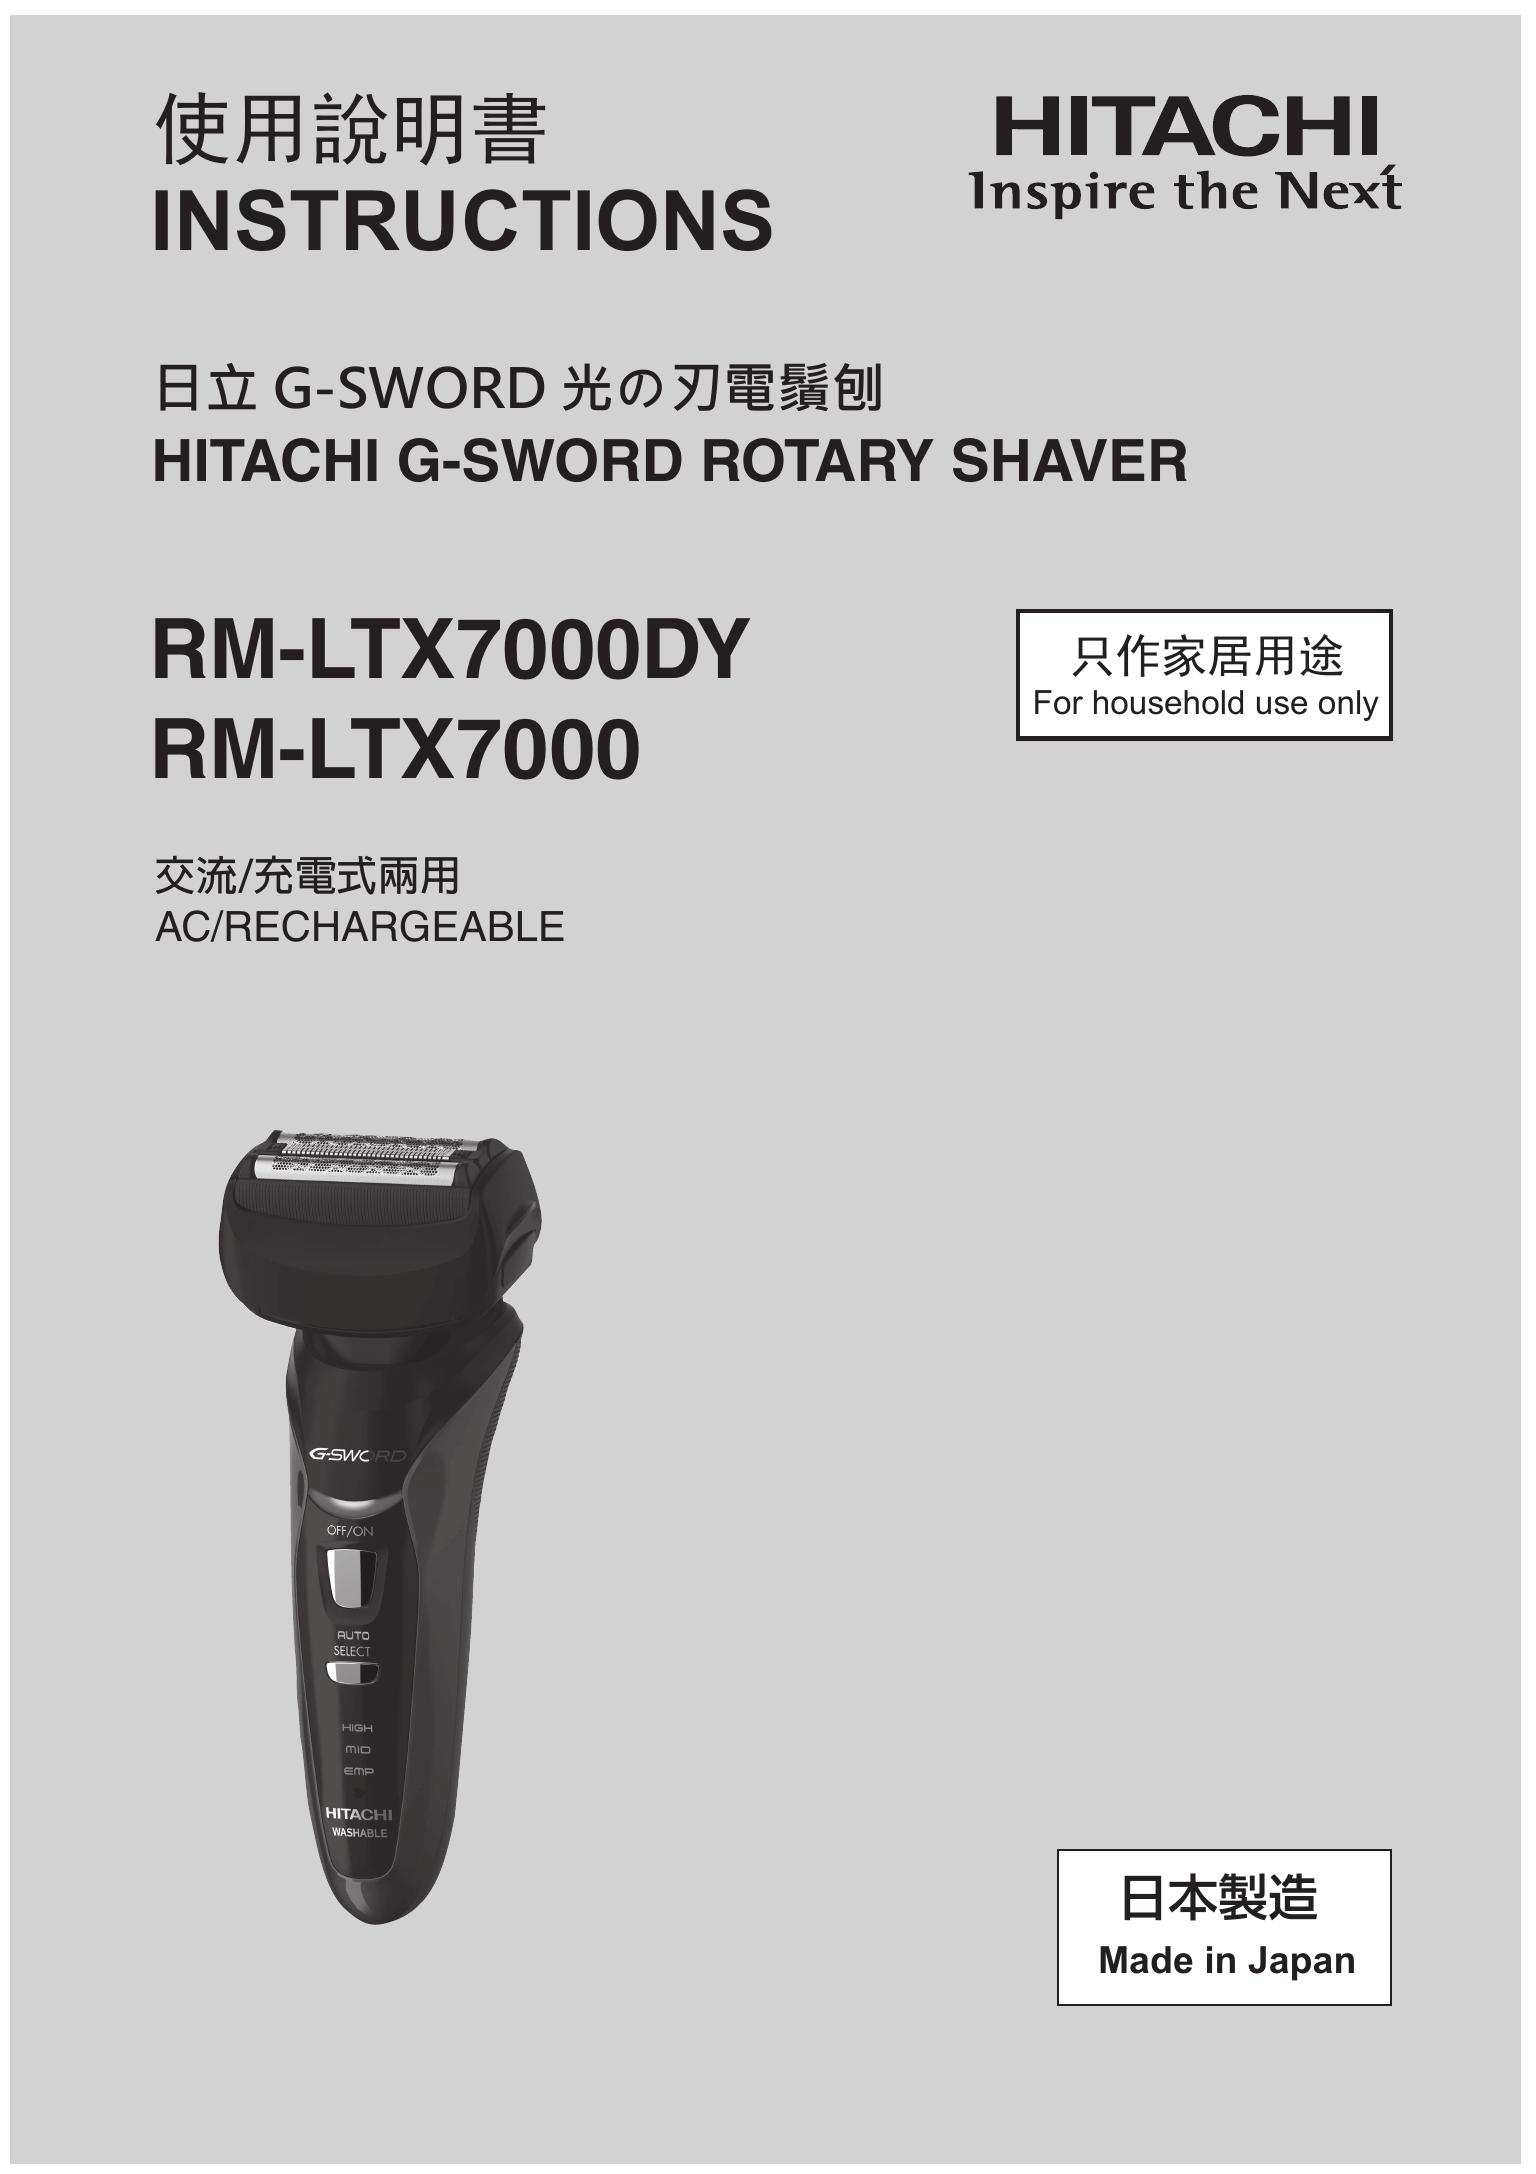 Hitachi rm-ltx7000dy Electric Shaver User Manual